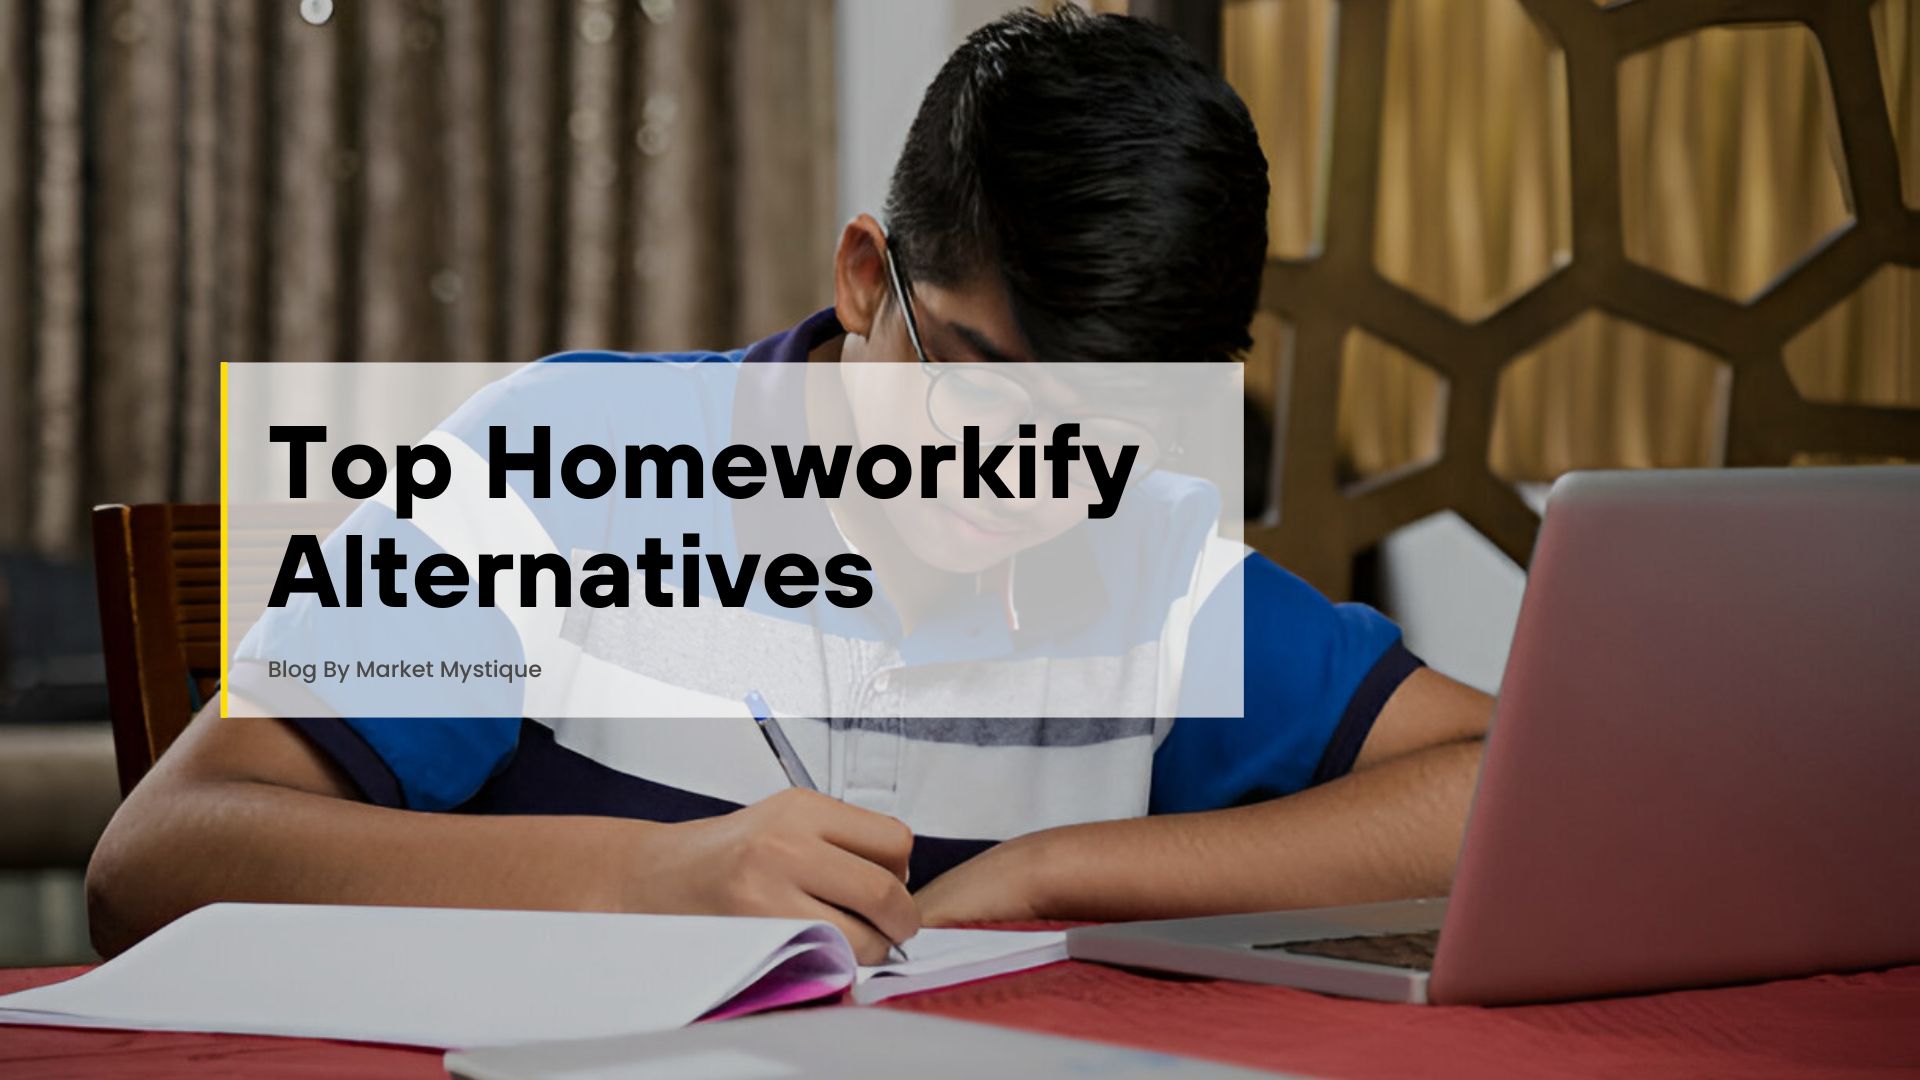 Homeworkify Alternatives